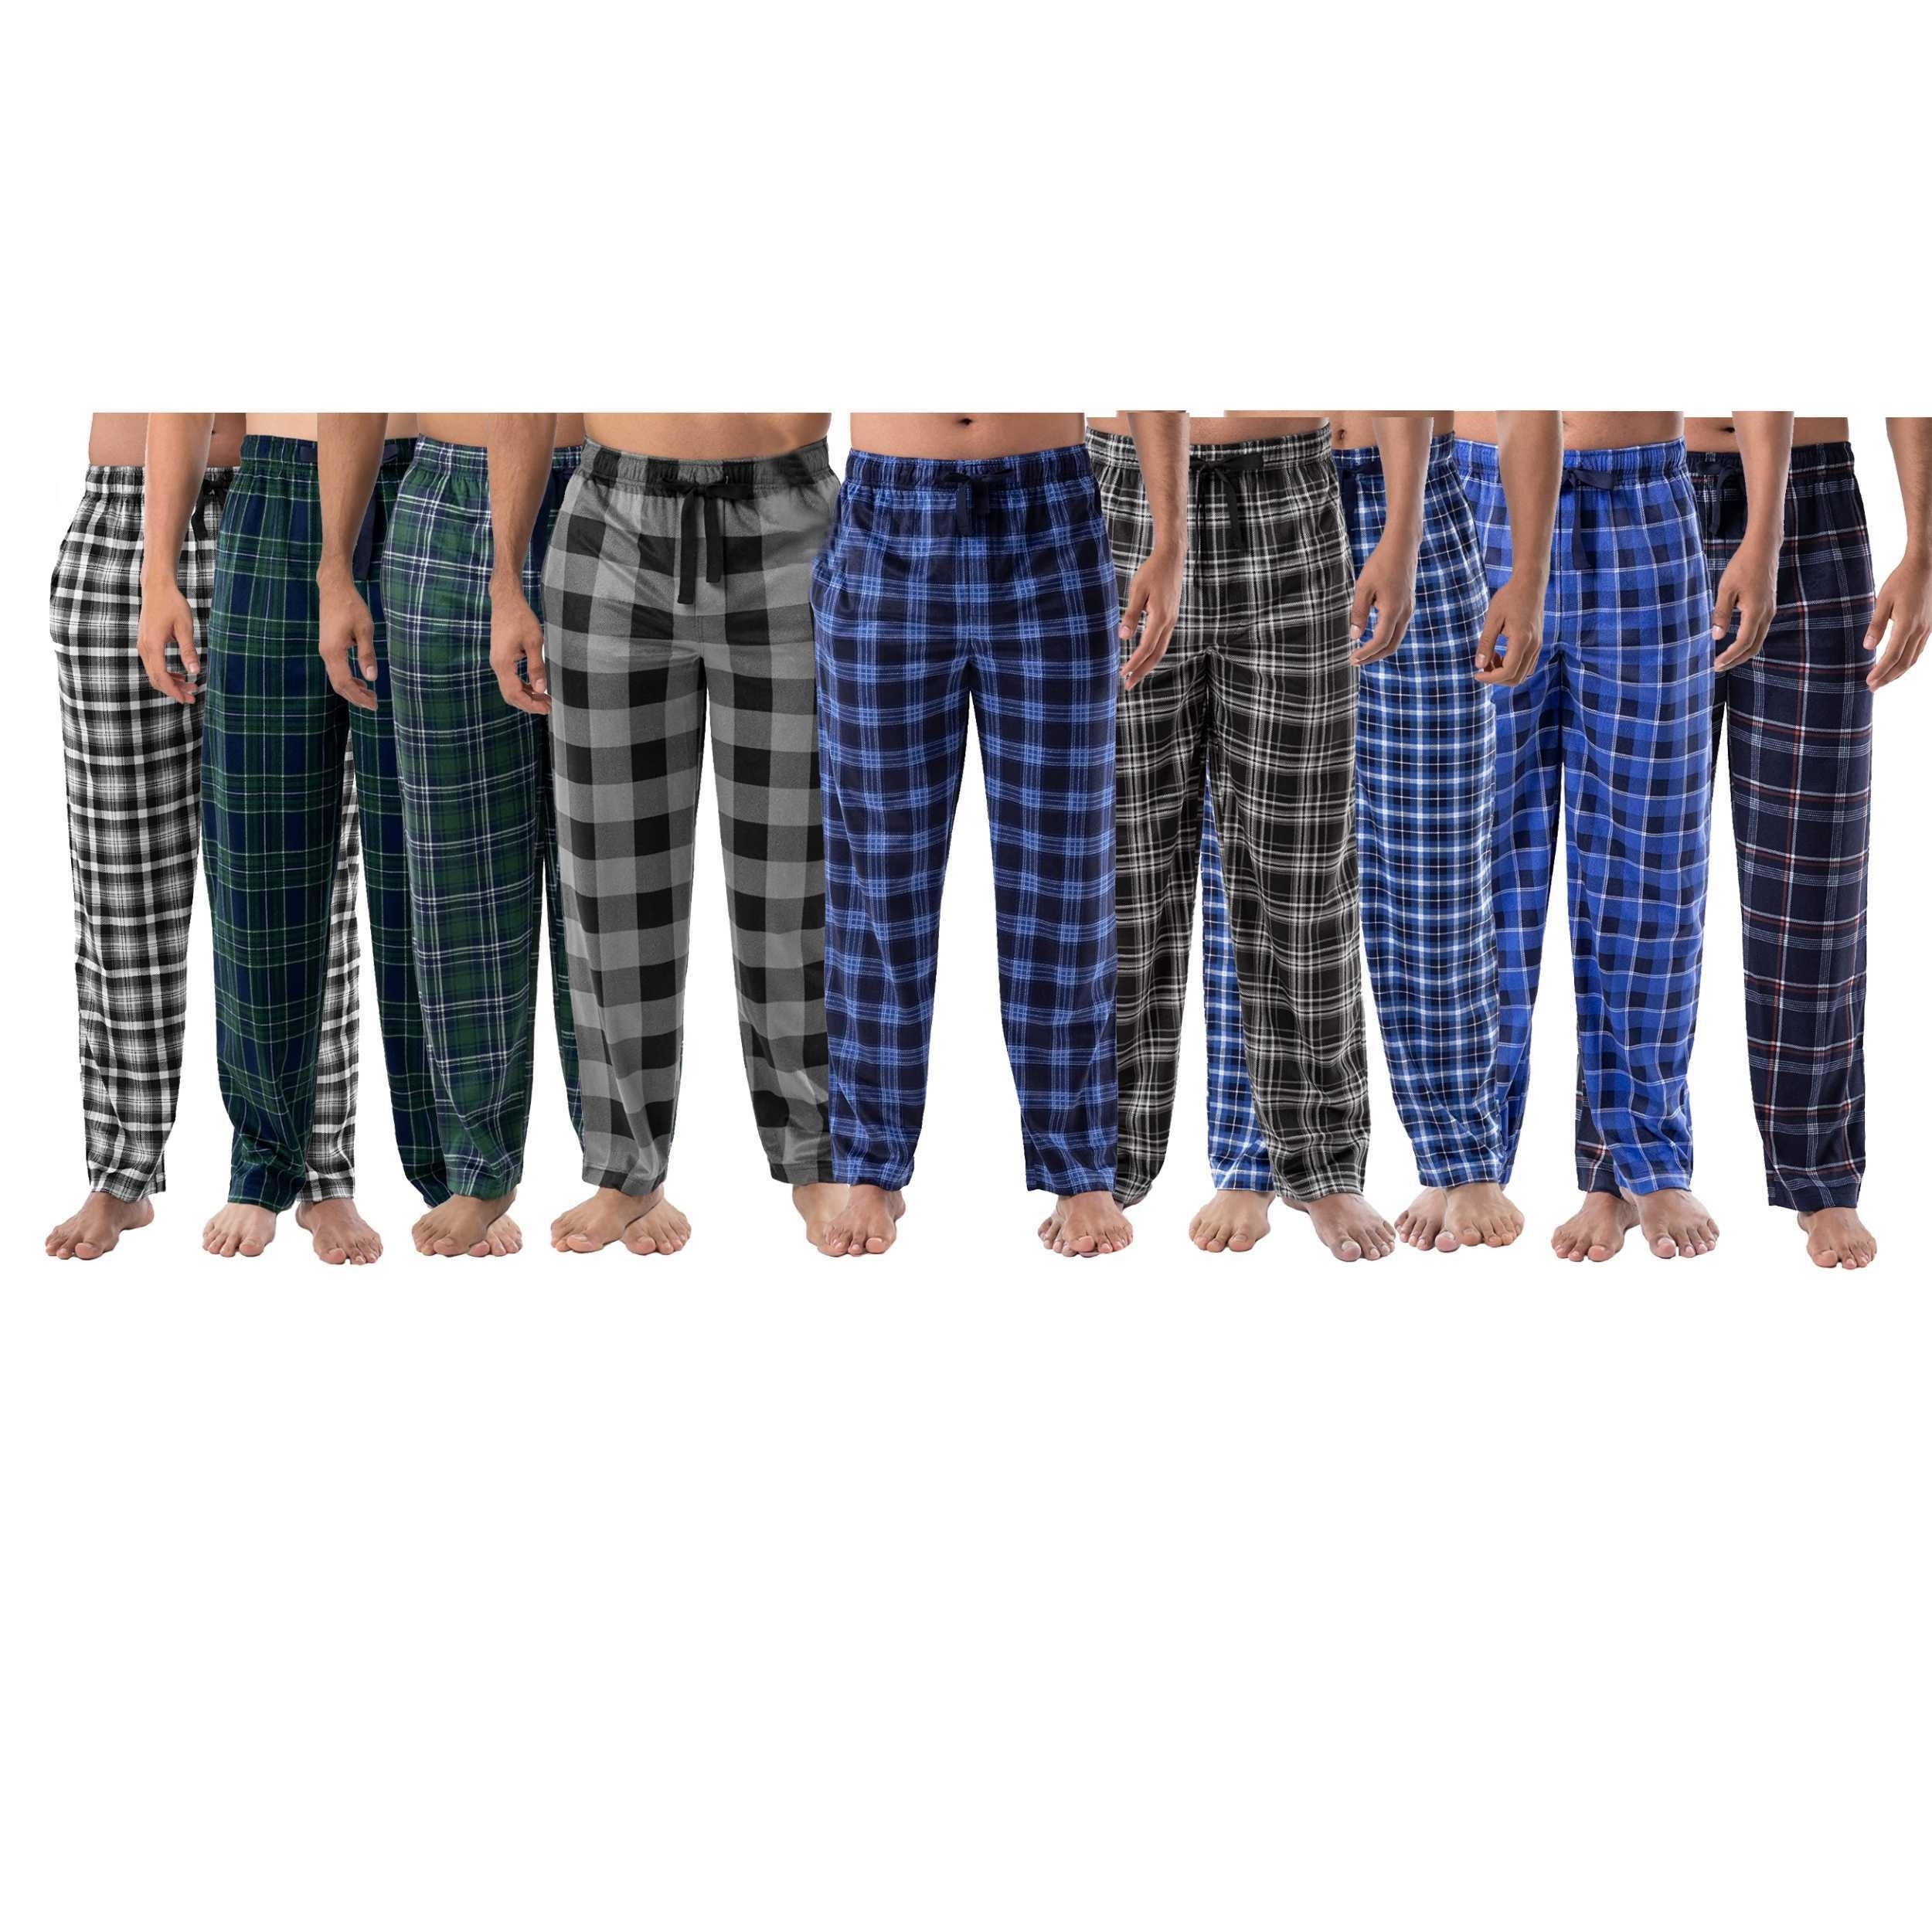 3 Pack: Men's Soft Micro Fleece Plaid Print Pajama Lounge Pants - Large